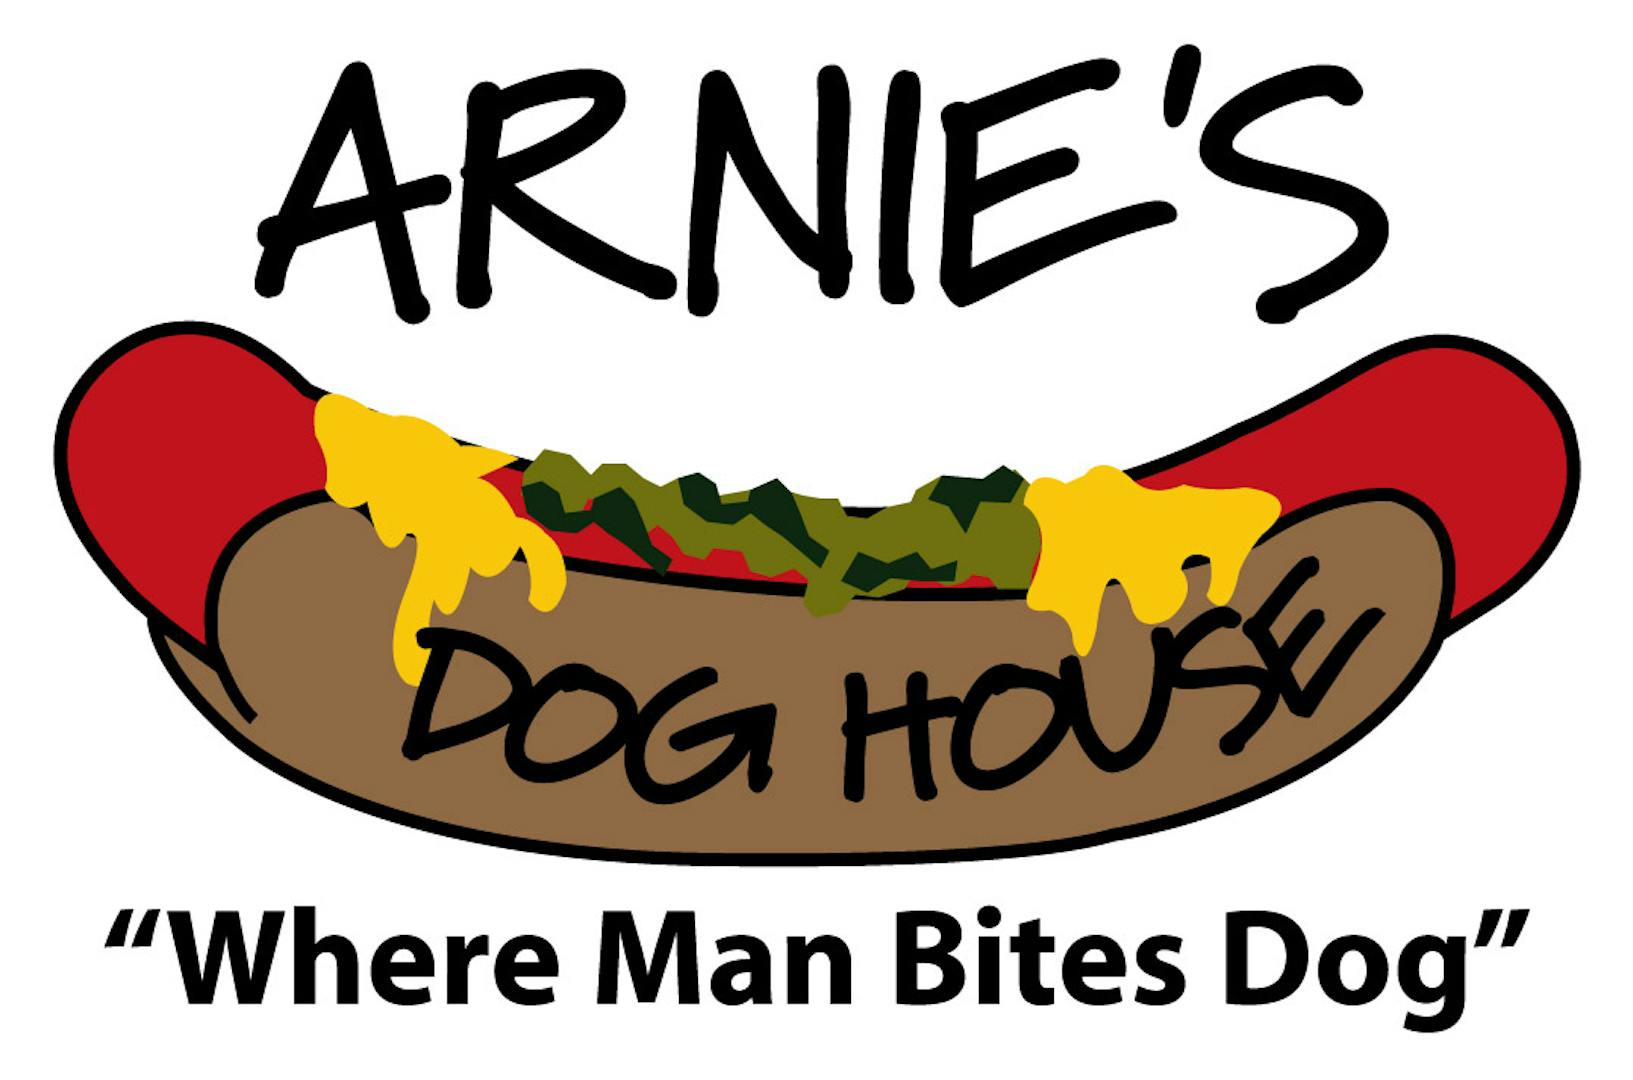 Arnie's Dog House